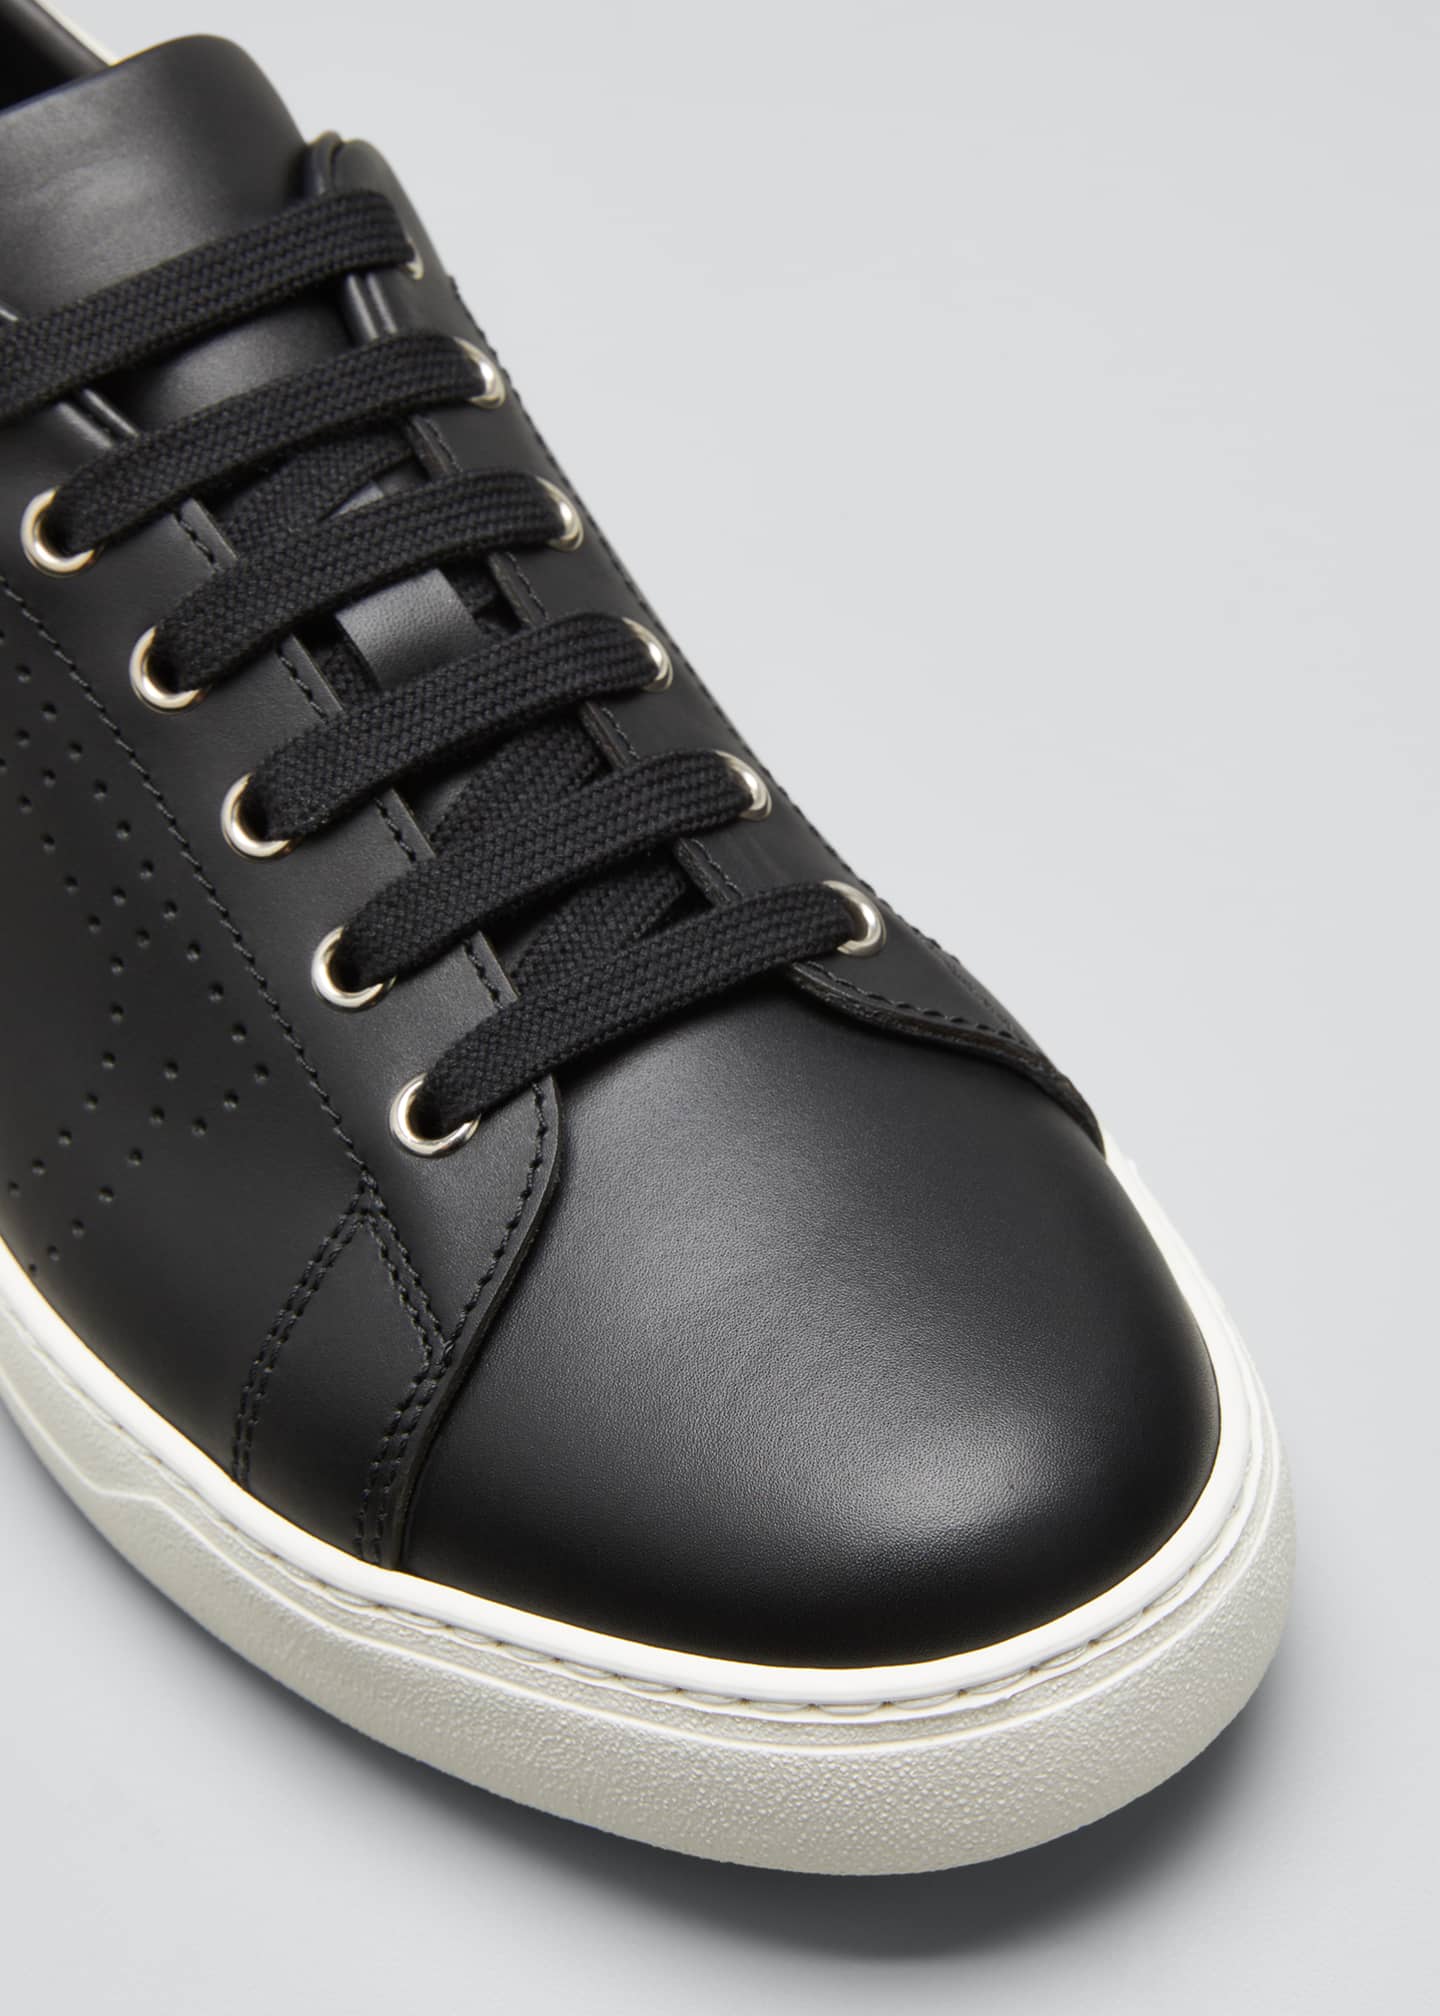 Salvatore Ferragamo Men's Pierre Two-Tone Leather Low-Top Sneakers ...